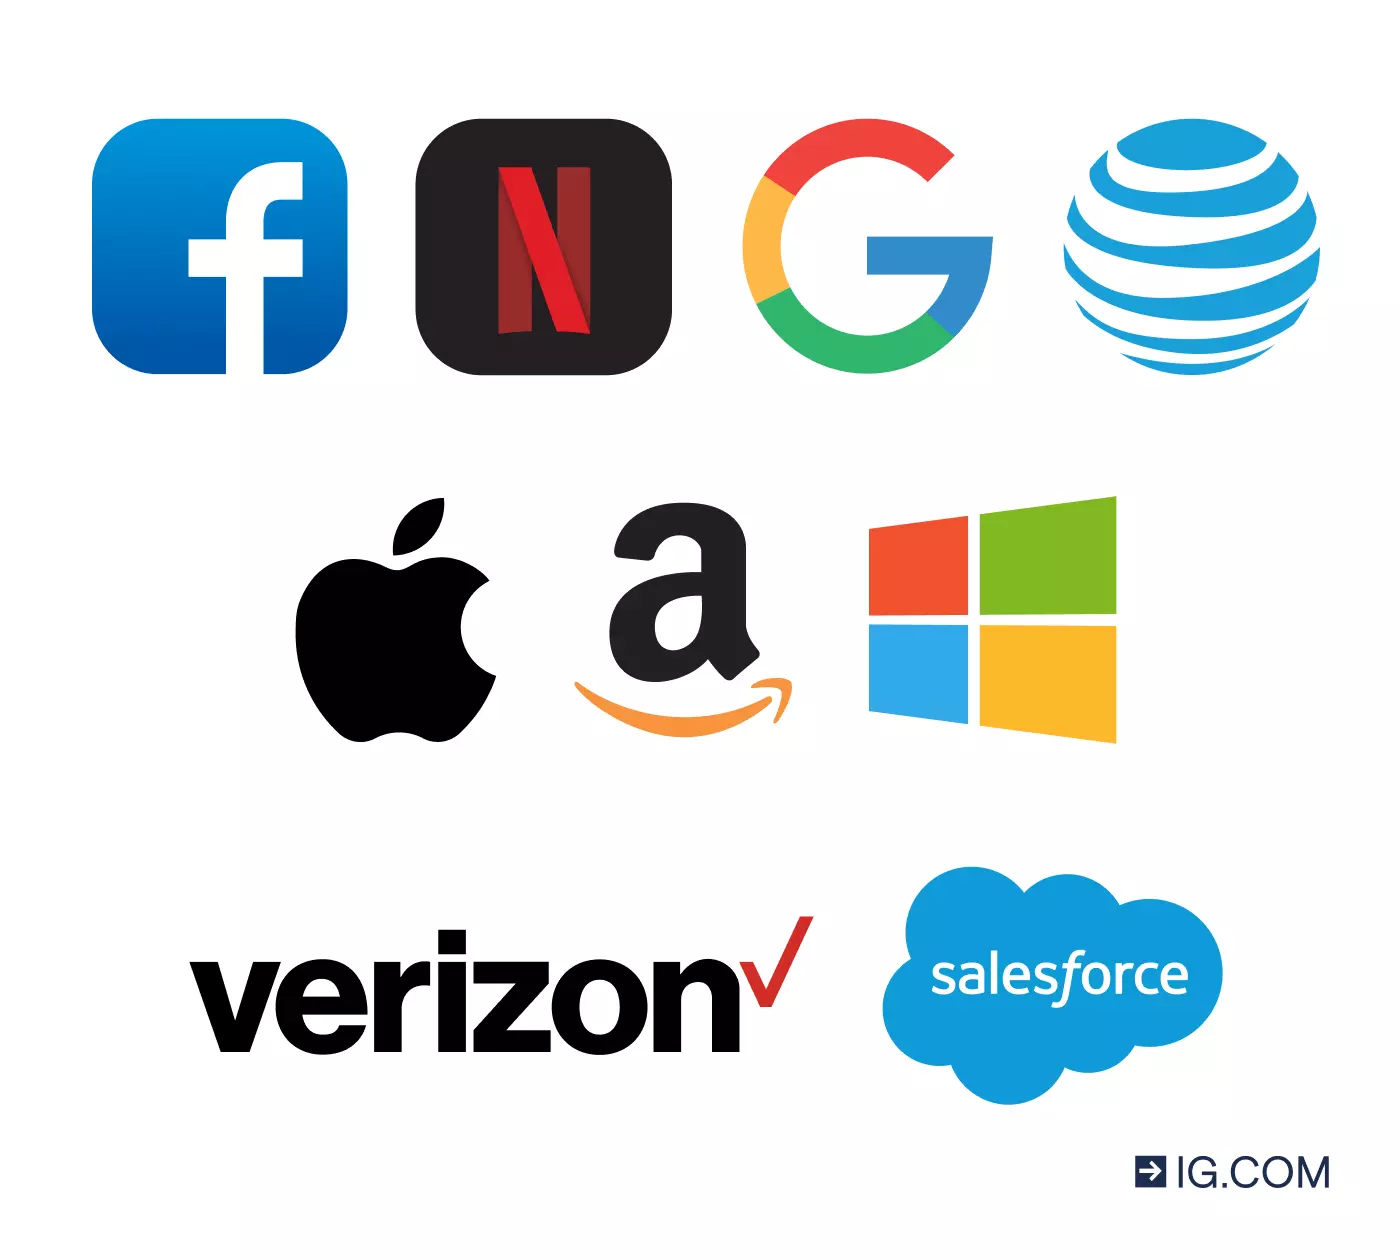 Image of best performing stock logos that include Facebook, Apple, Amazon, Netflix, Google, Microsoft, Verizon, and Salesforce.